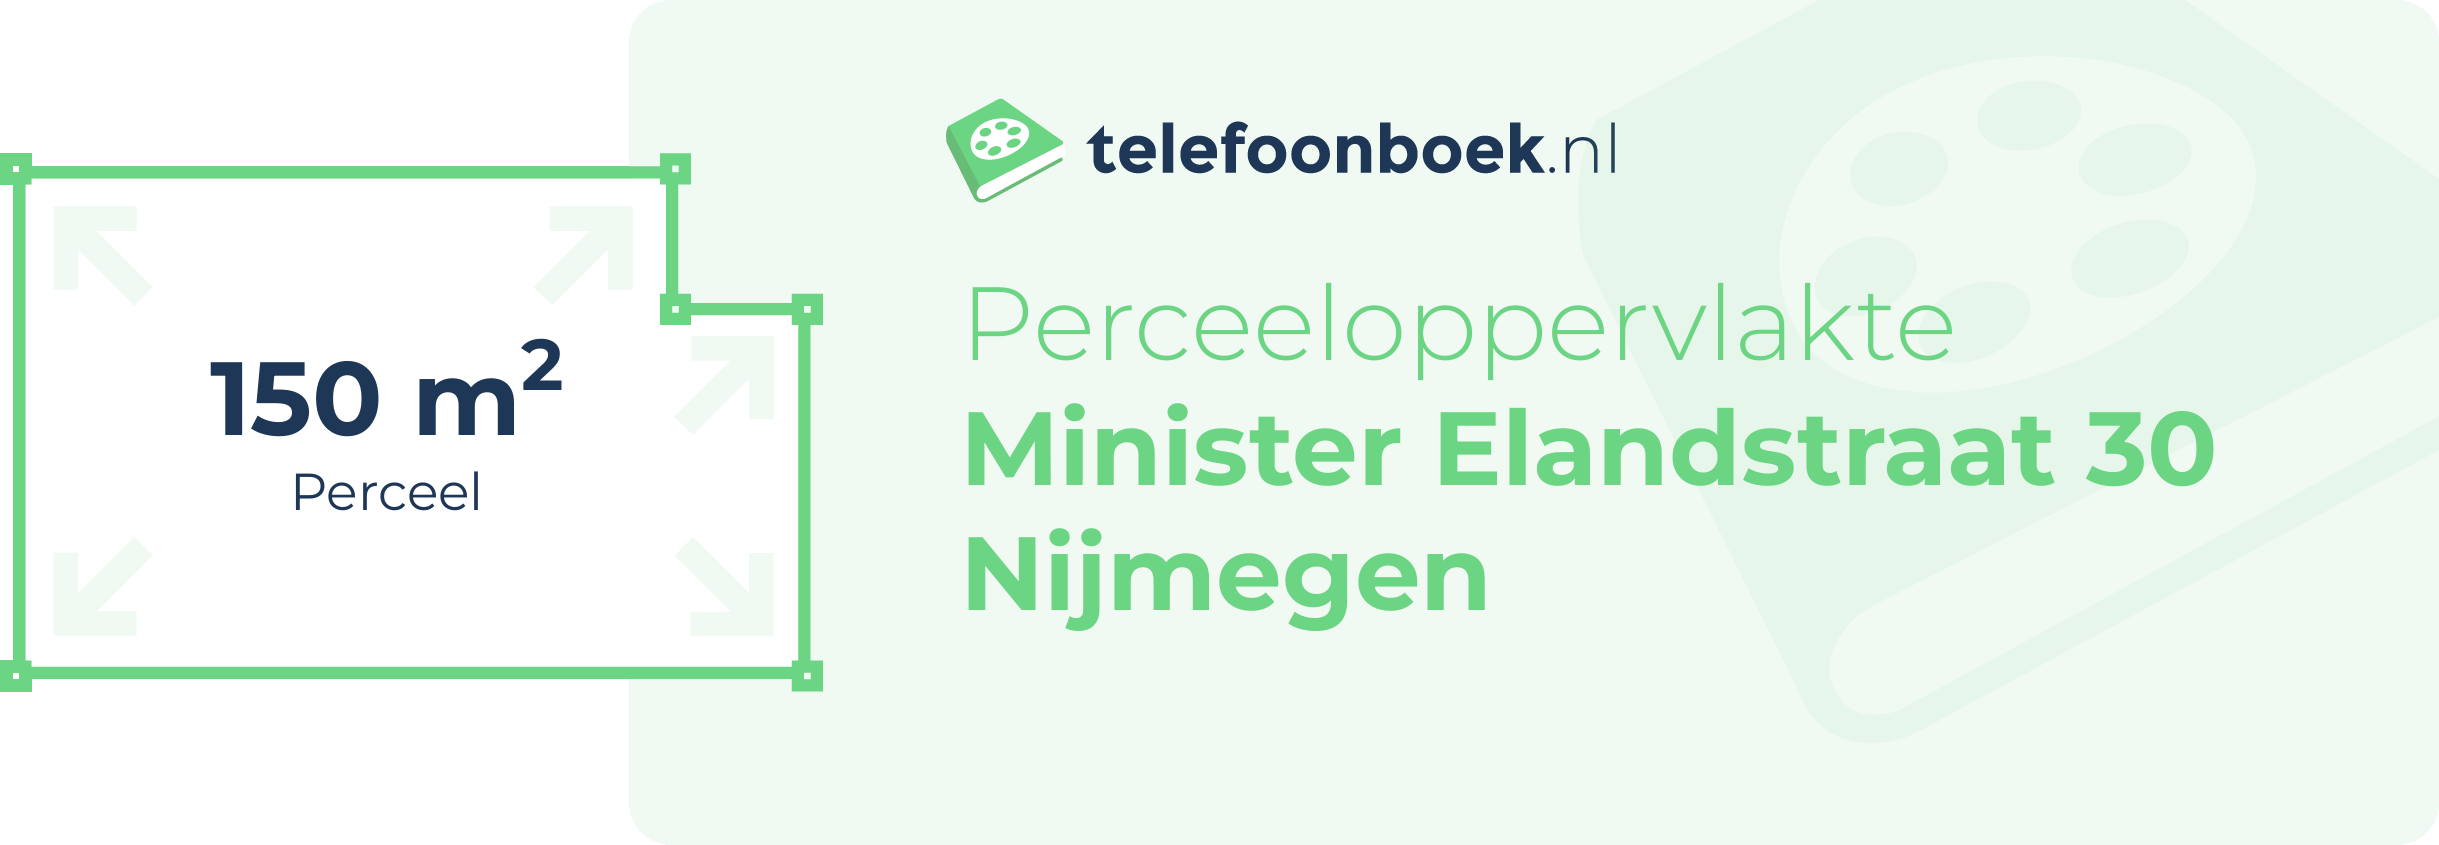 Perceeloppervlakte Minister Elandstraat 30 Nijmegen